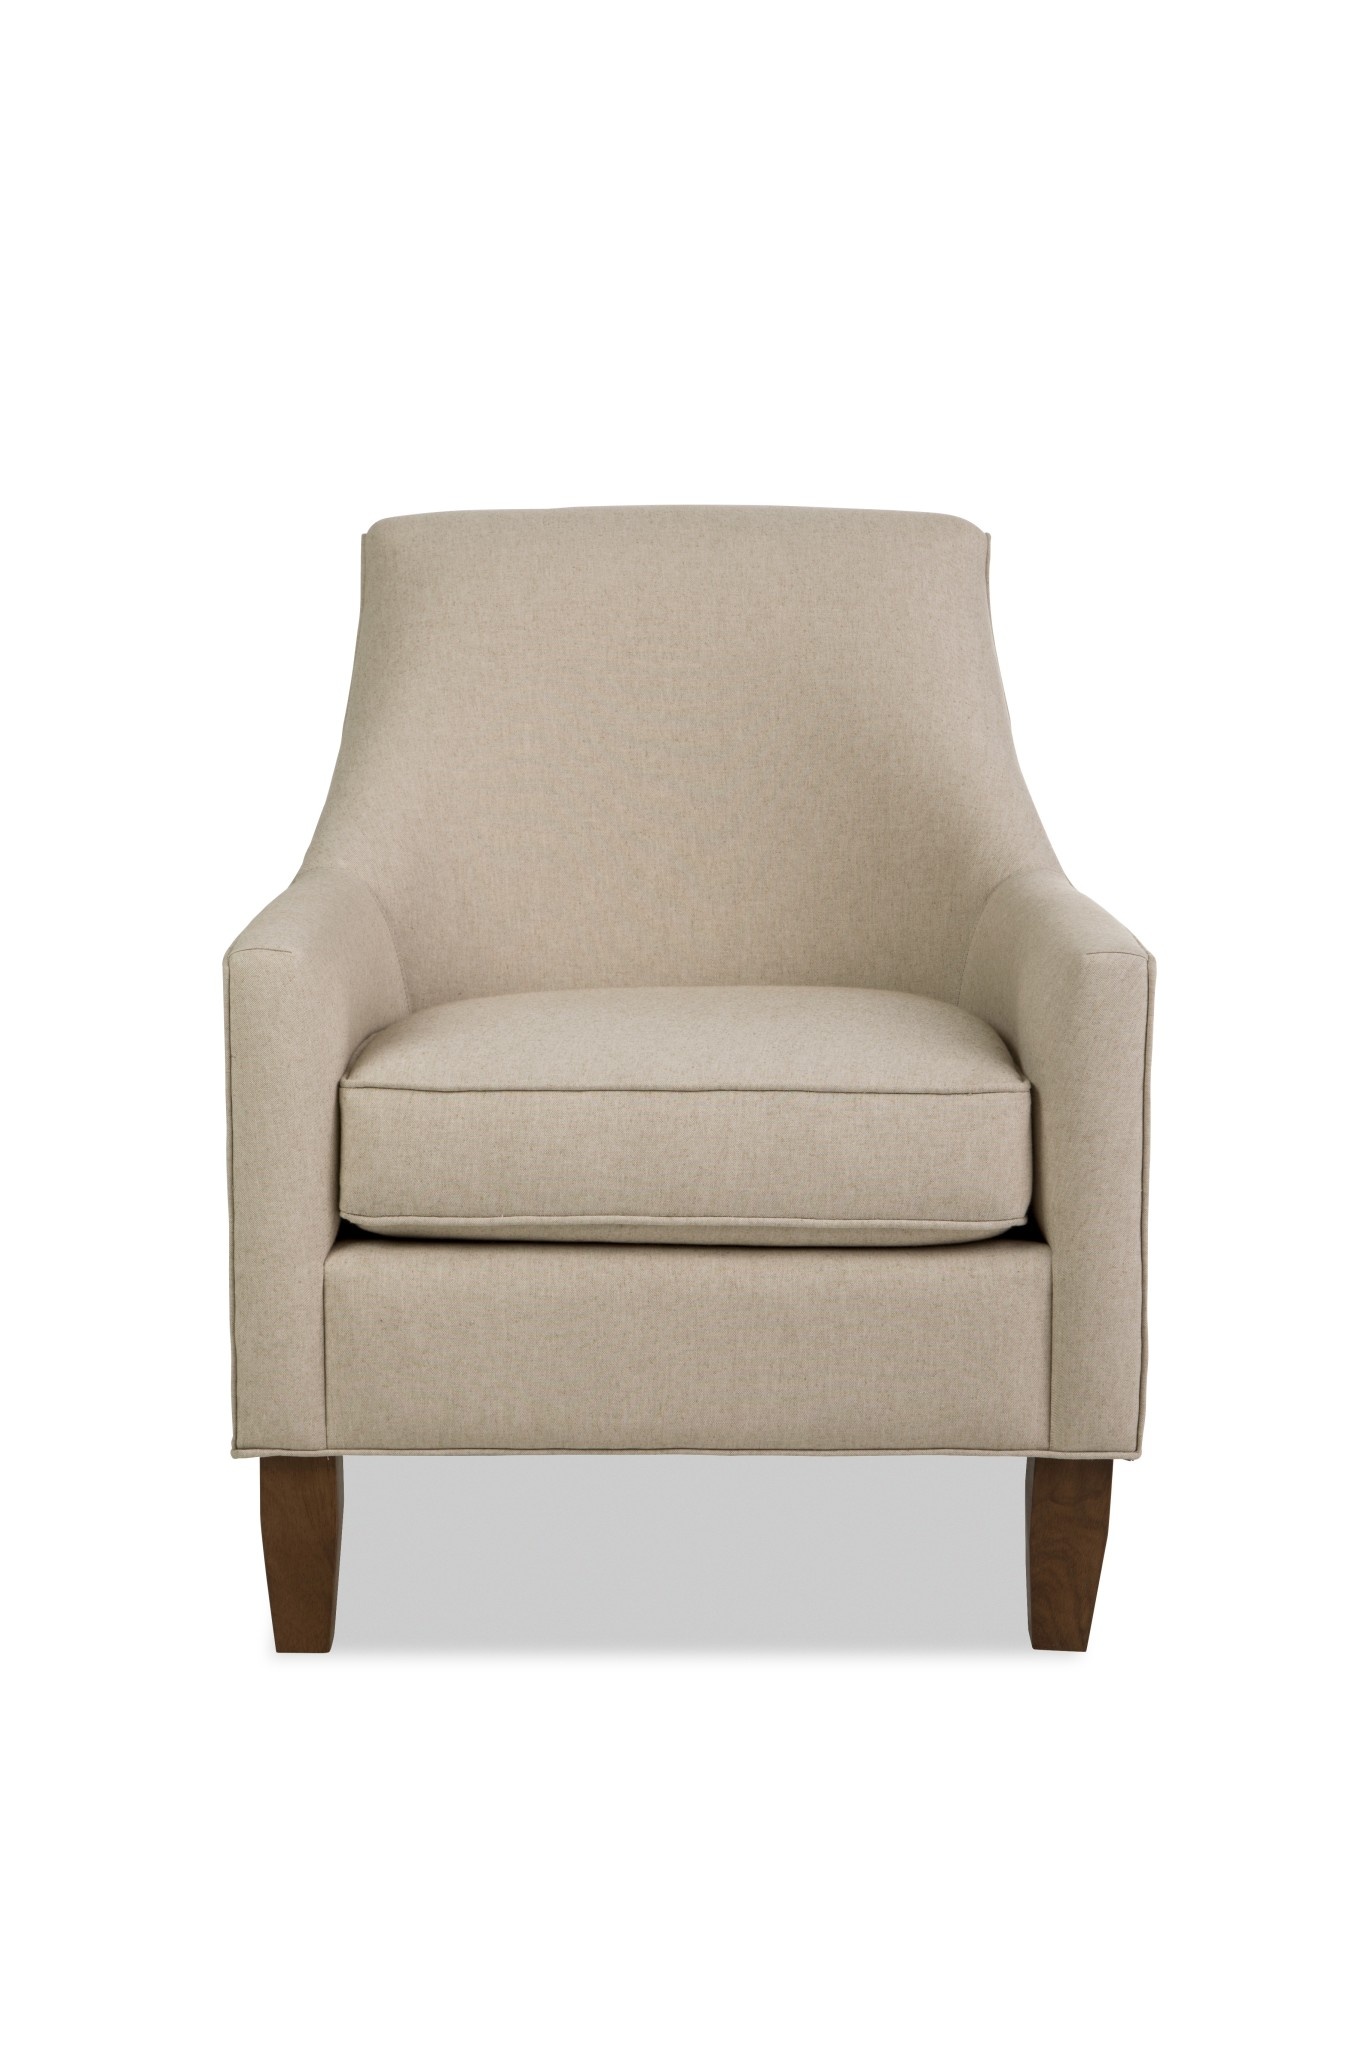 Craftmaster Furniture 049810 Chair